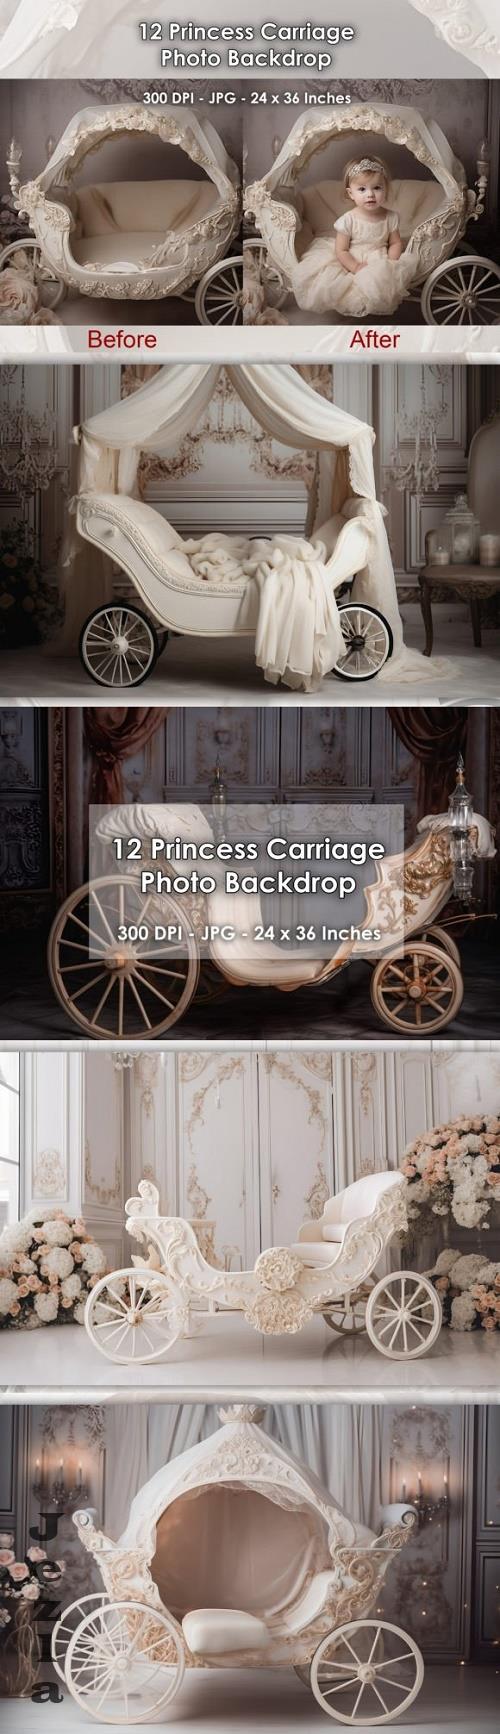 12 Princess Carriage Photo Backdrop JPG